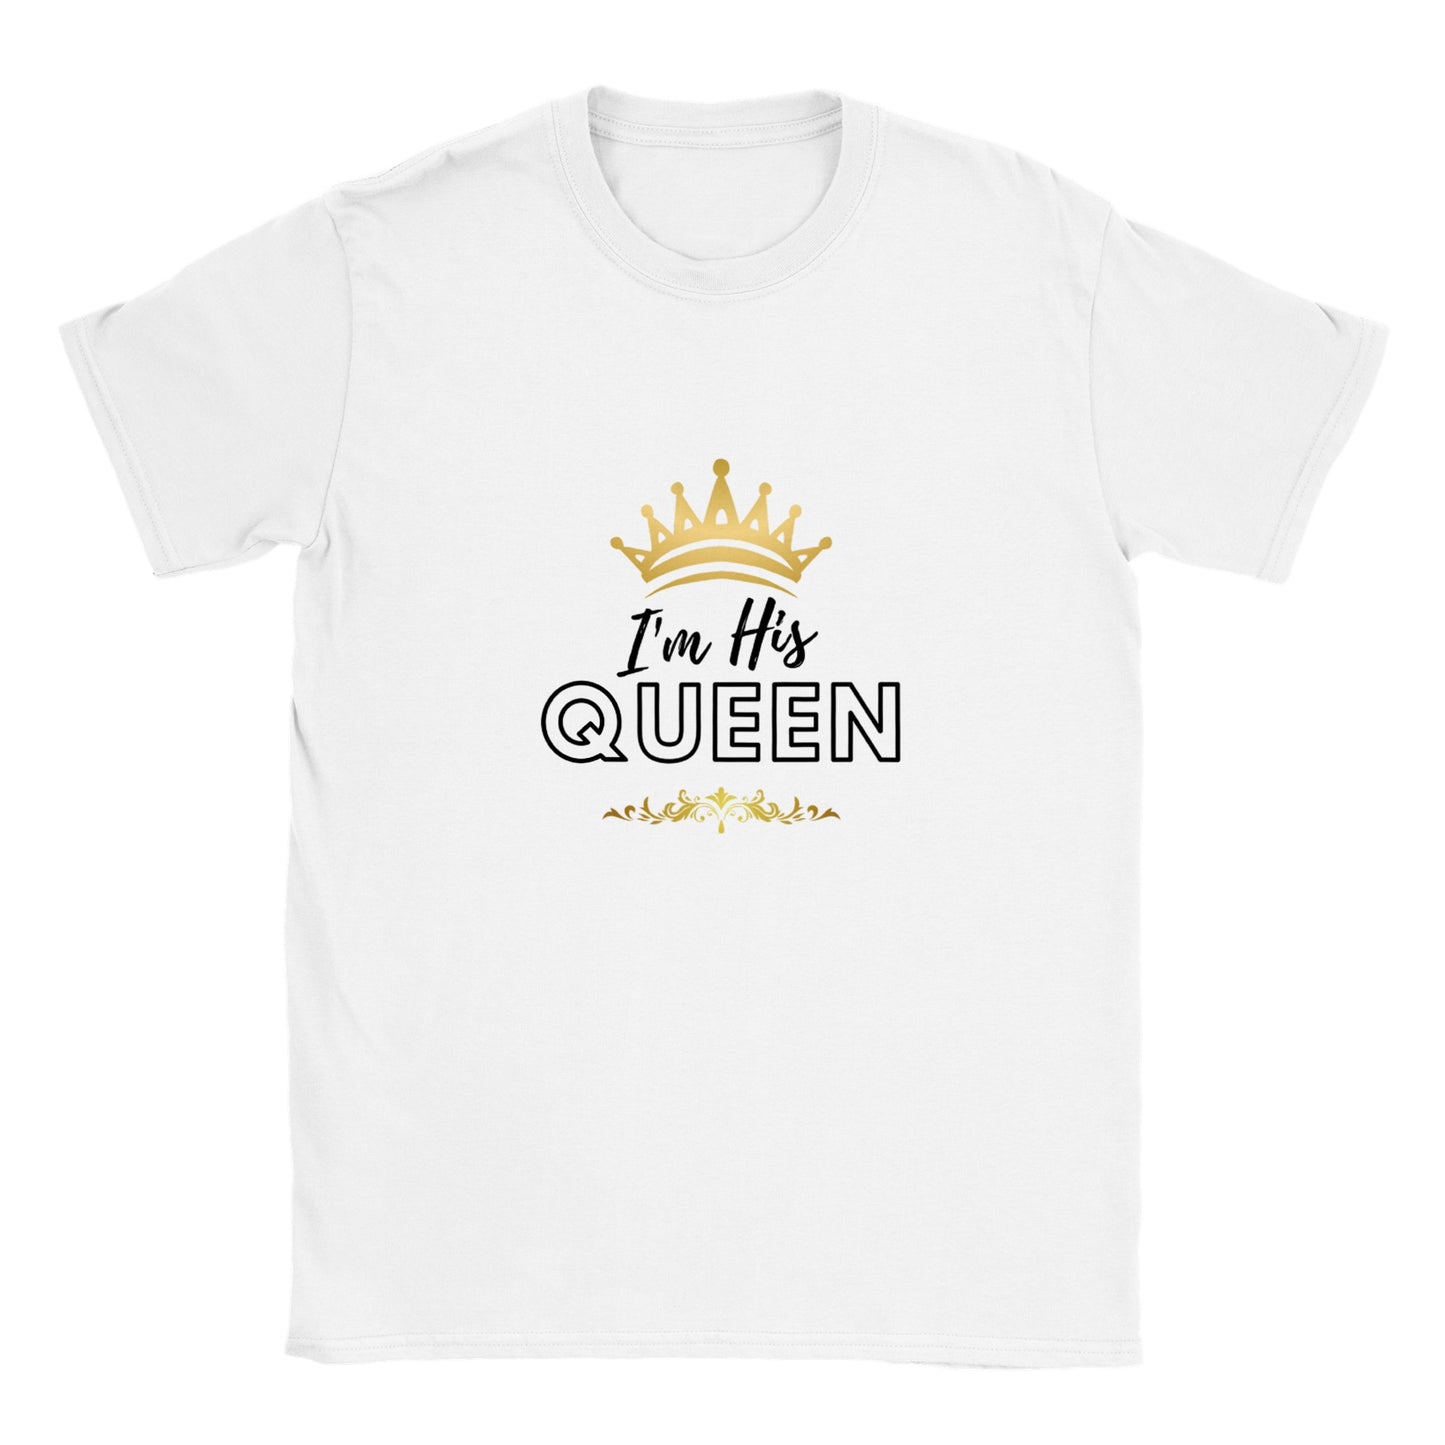 I'm His Queen T-shirt